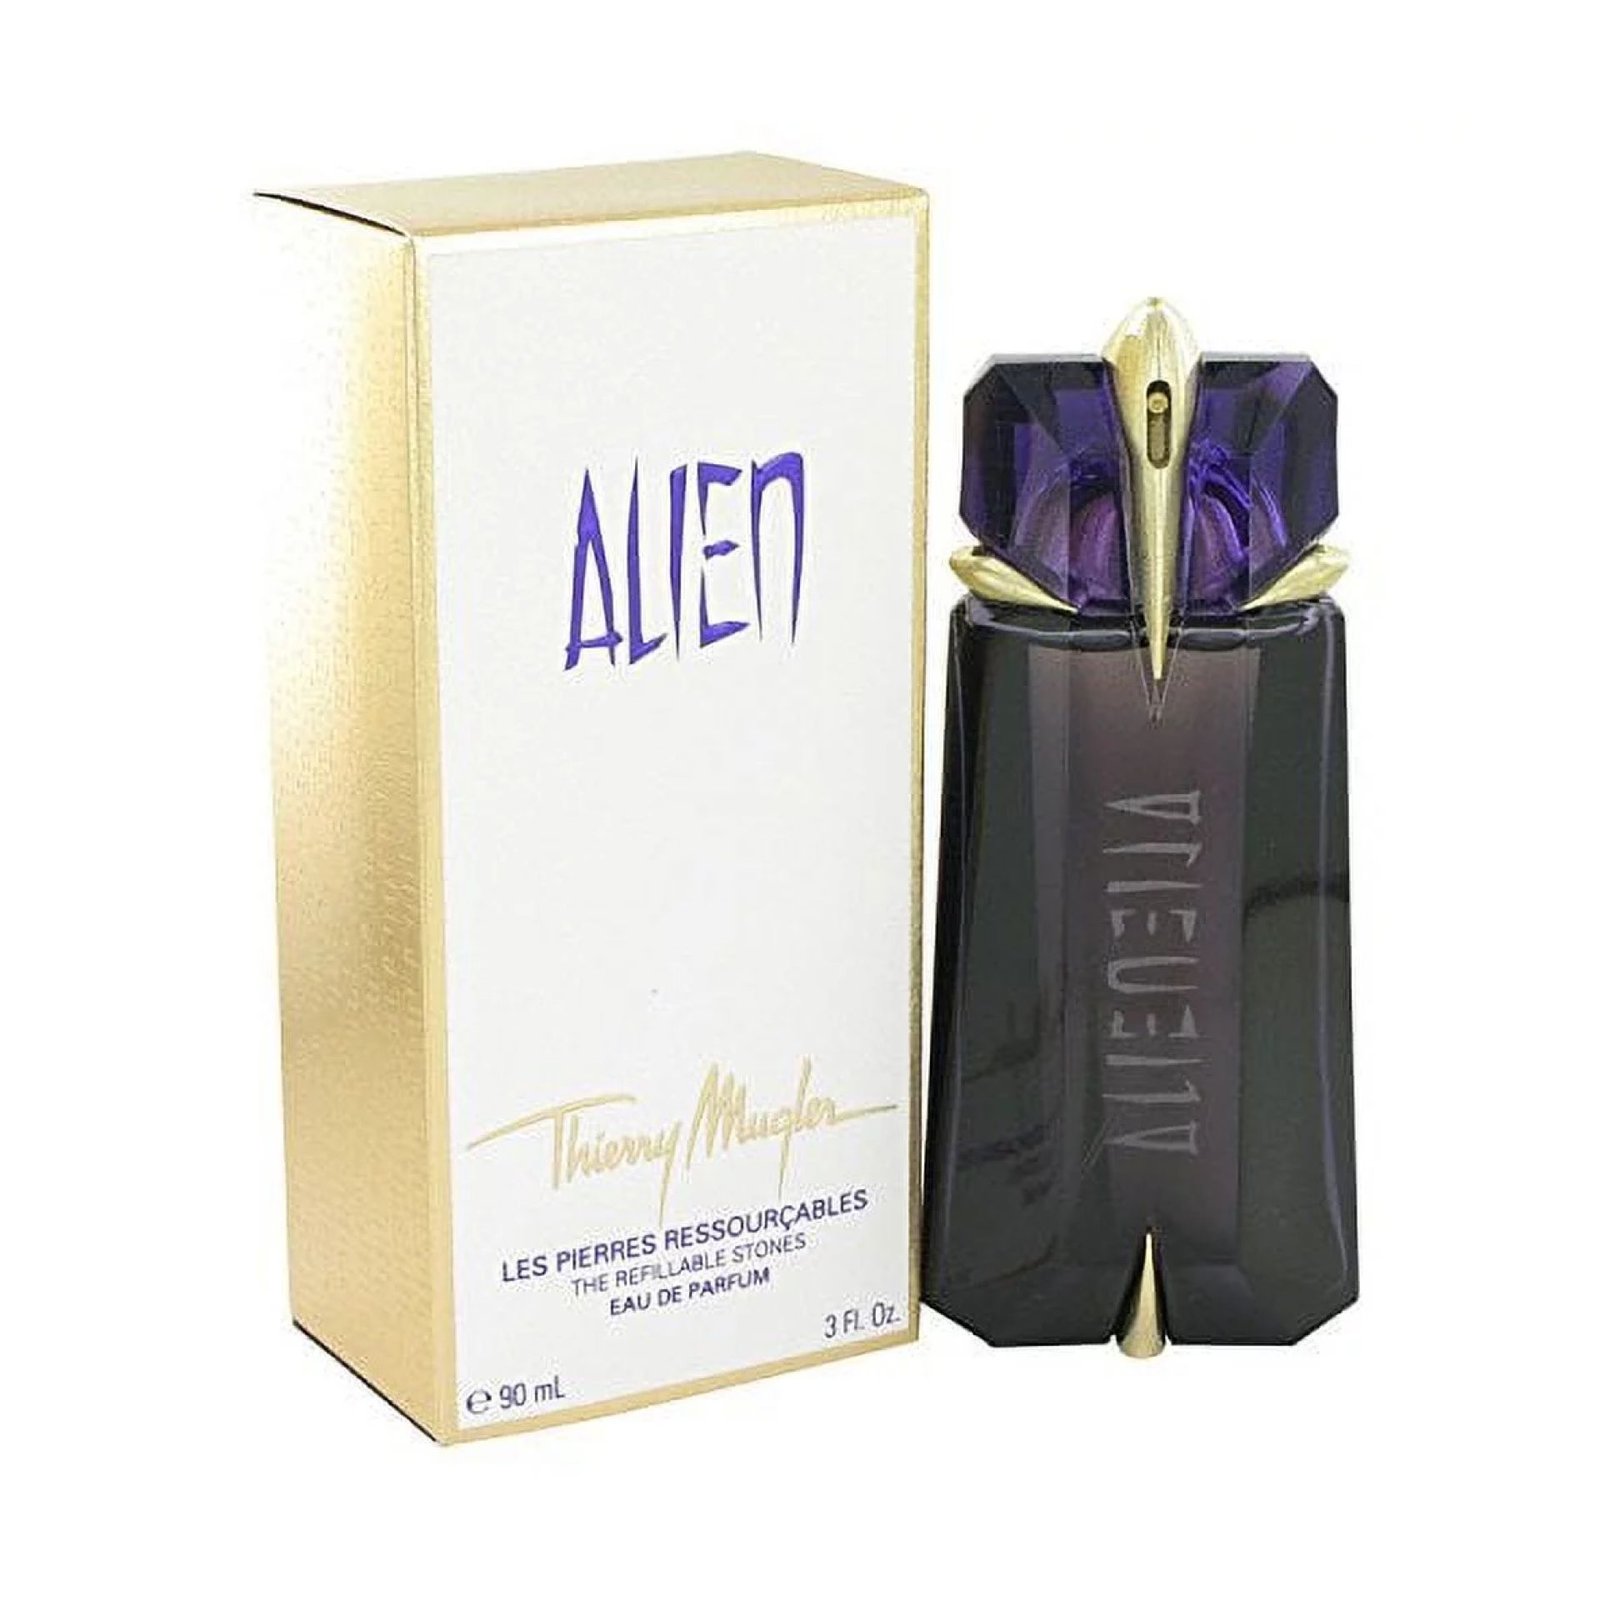 Buy Thierry Mugler Alien Eau De Parfum - 90ml at Rs. 25000 from Likeshop.pk